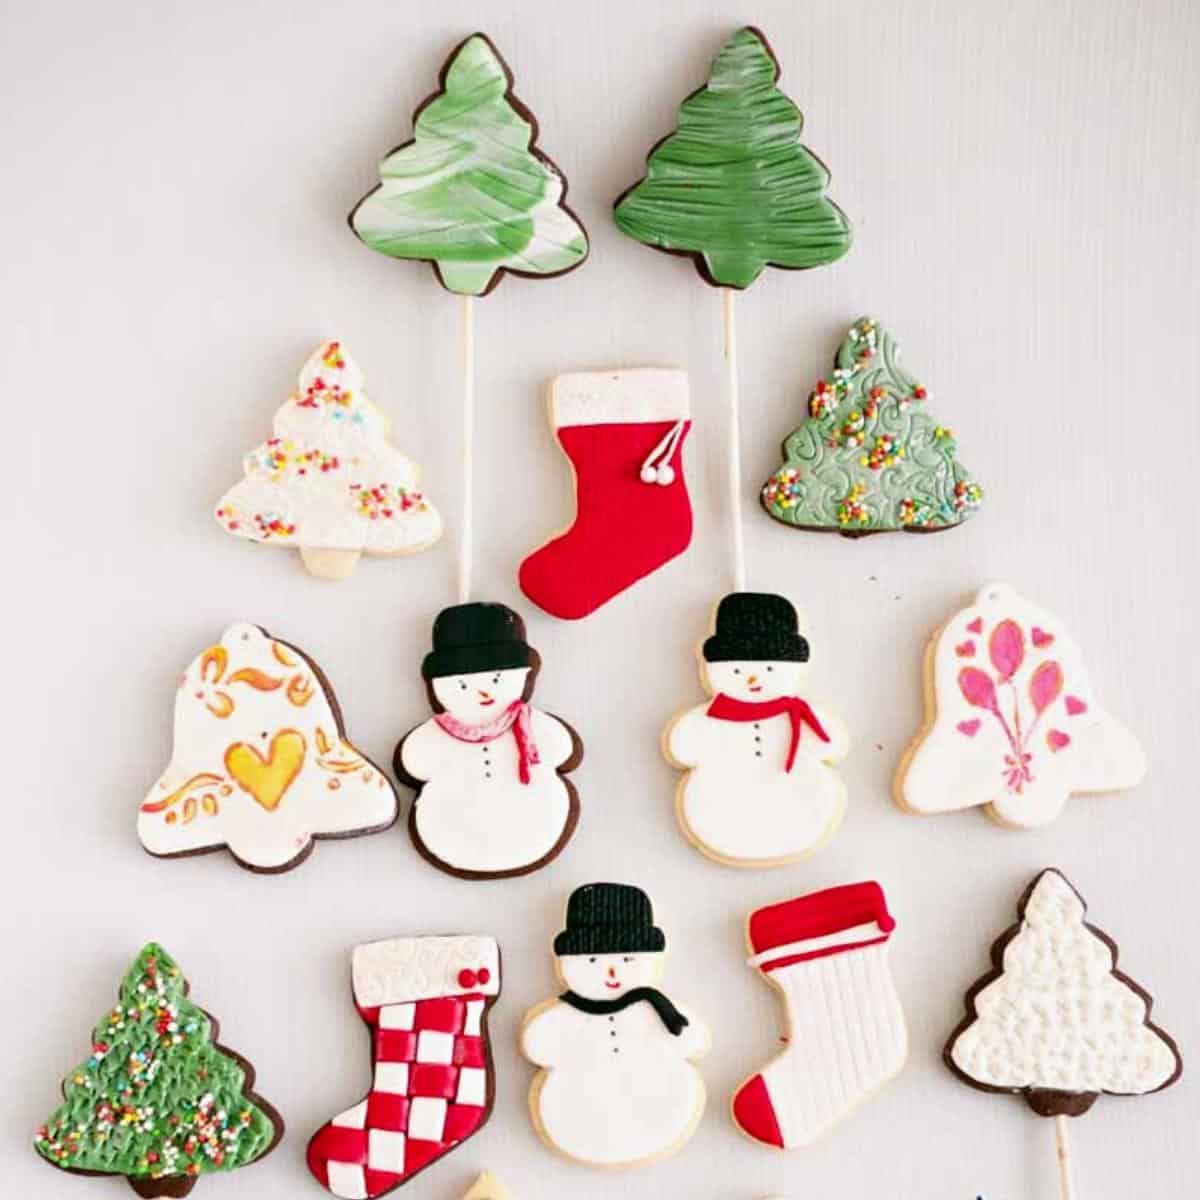 Christmas cookies on the table.